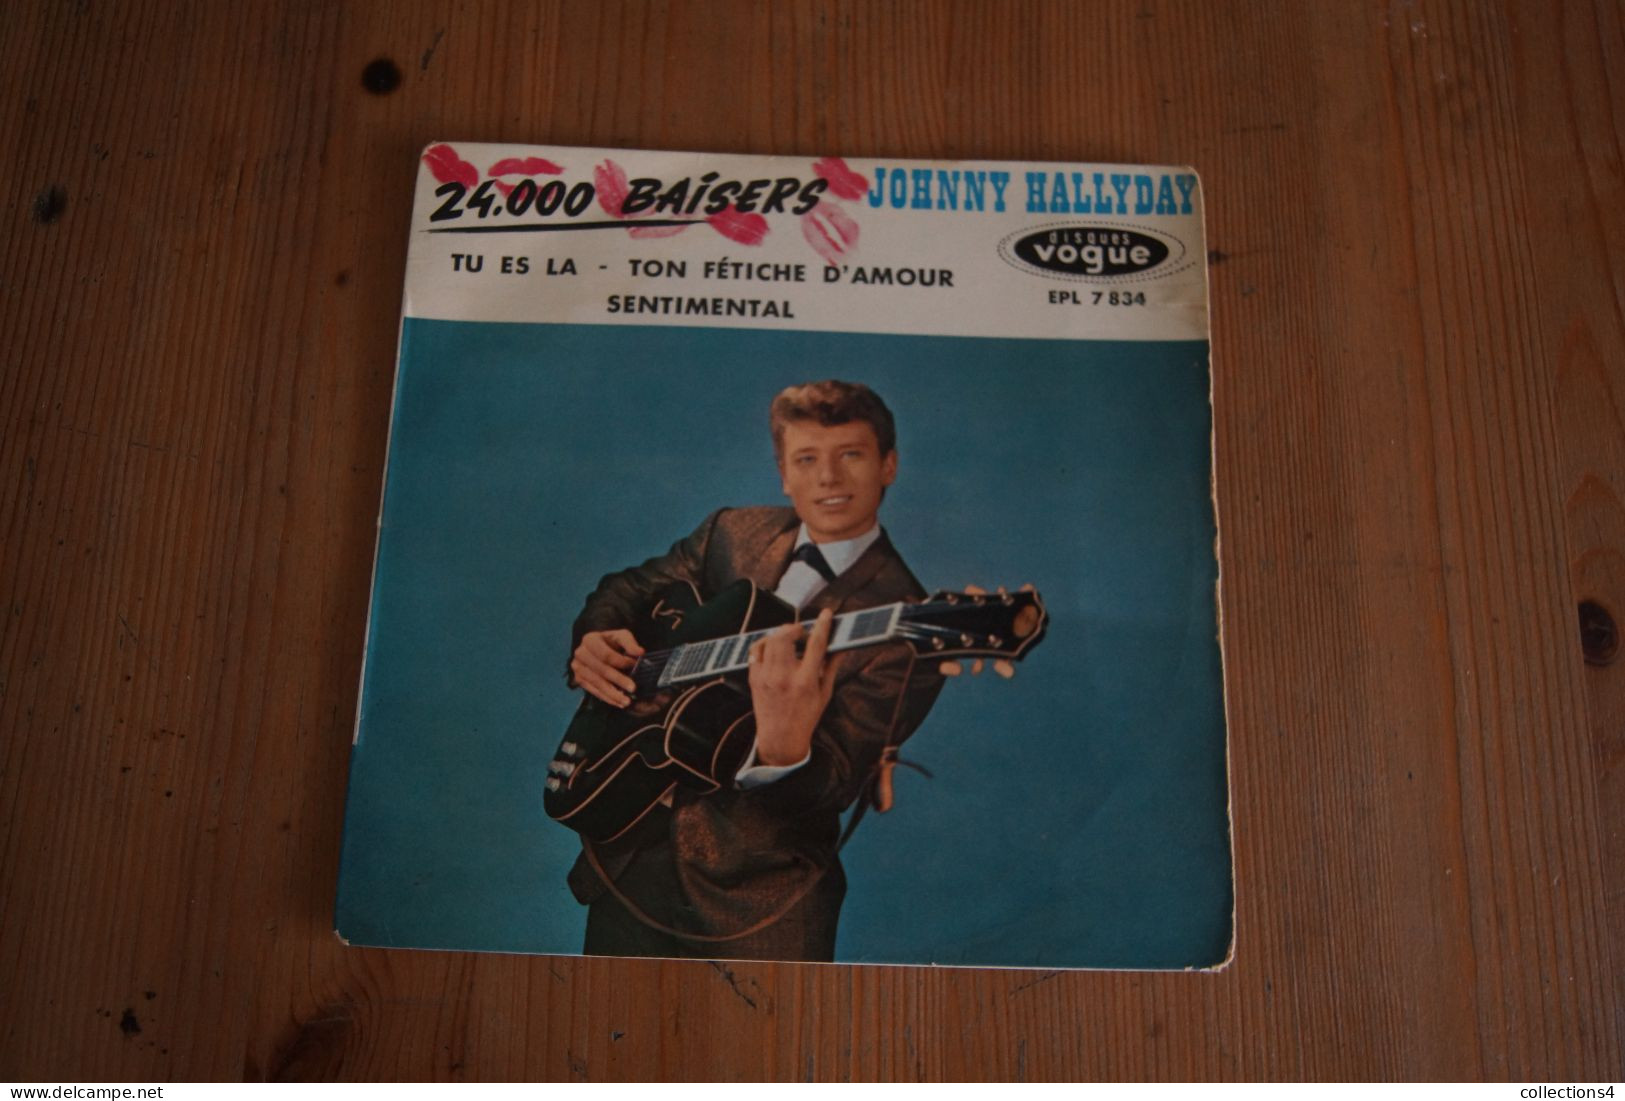 JOHNNY HALLYDAY 24 000 BAISERS  EP   1961 LANGUETTE VALEUR+ - 45 T - Maxi-Single